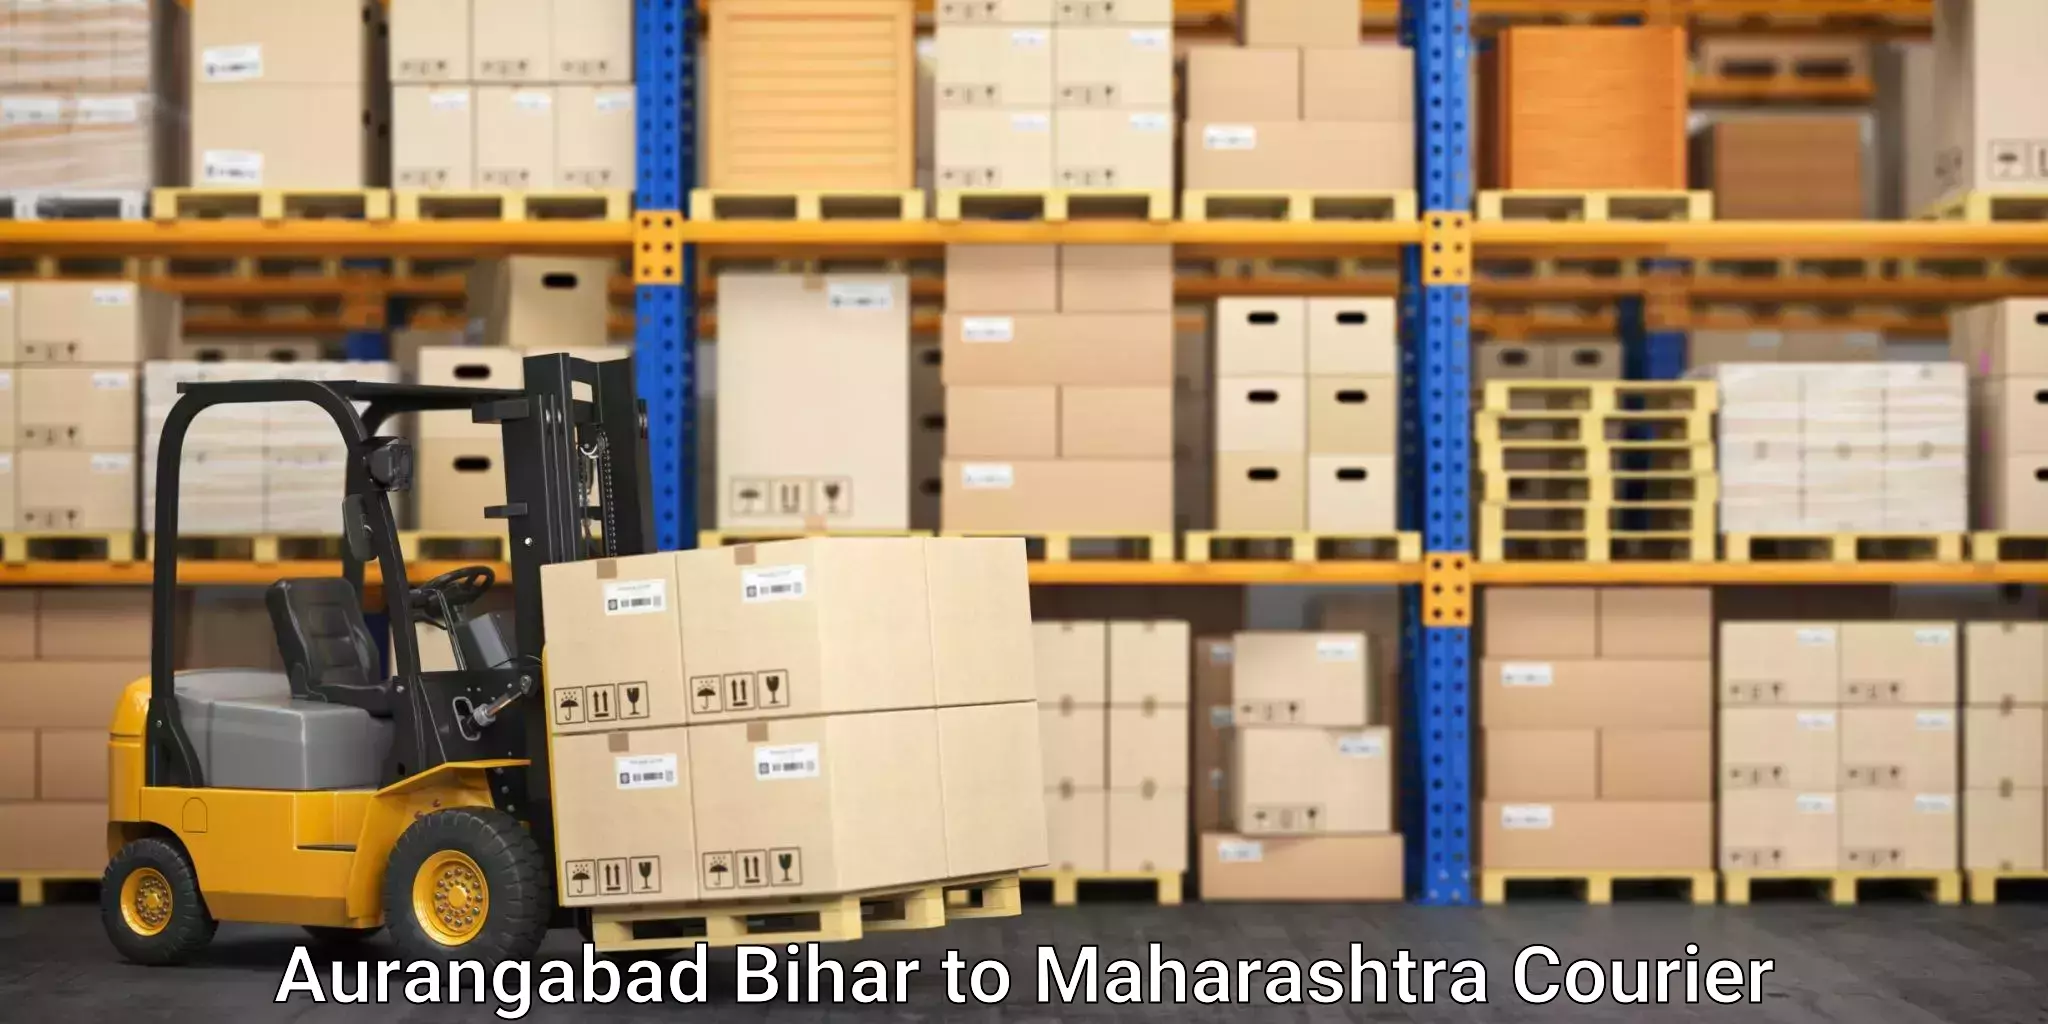 Professional moving company Aurangabad Bihar to Ahmednagar